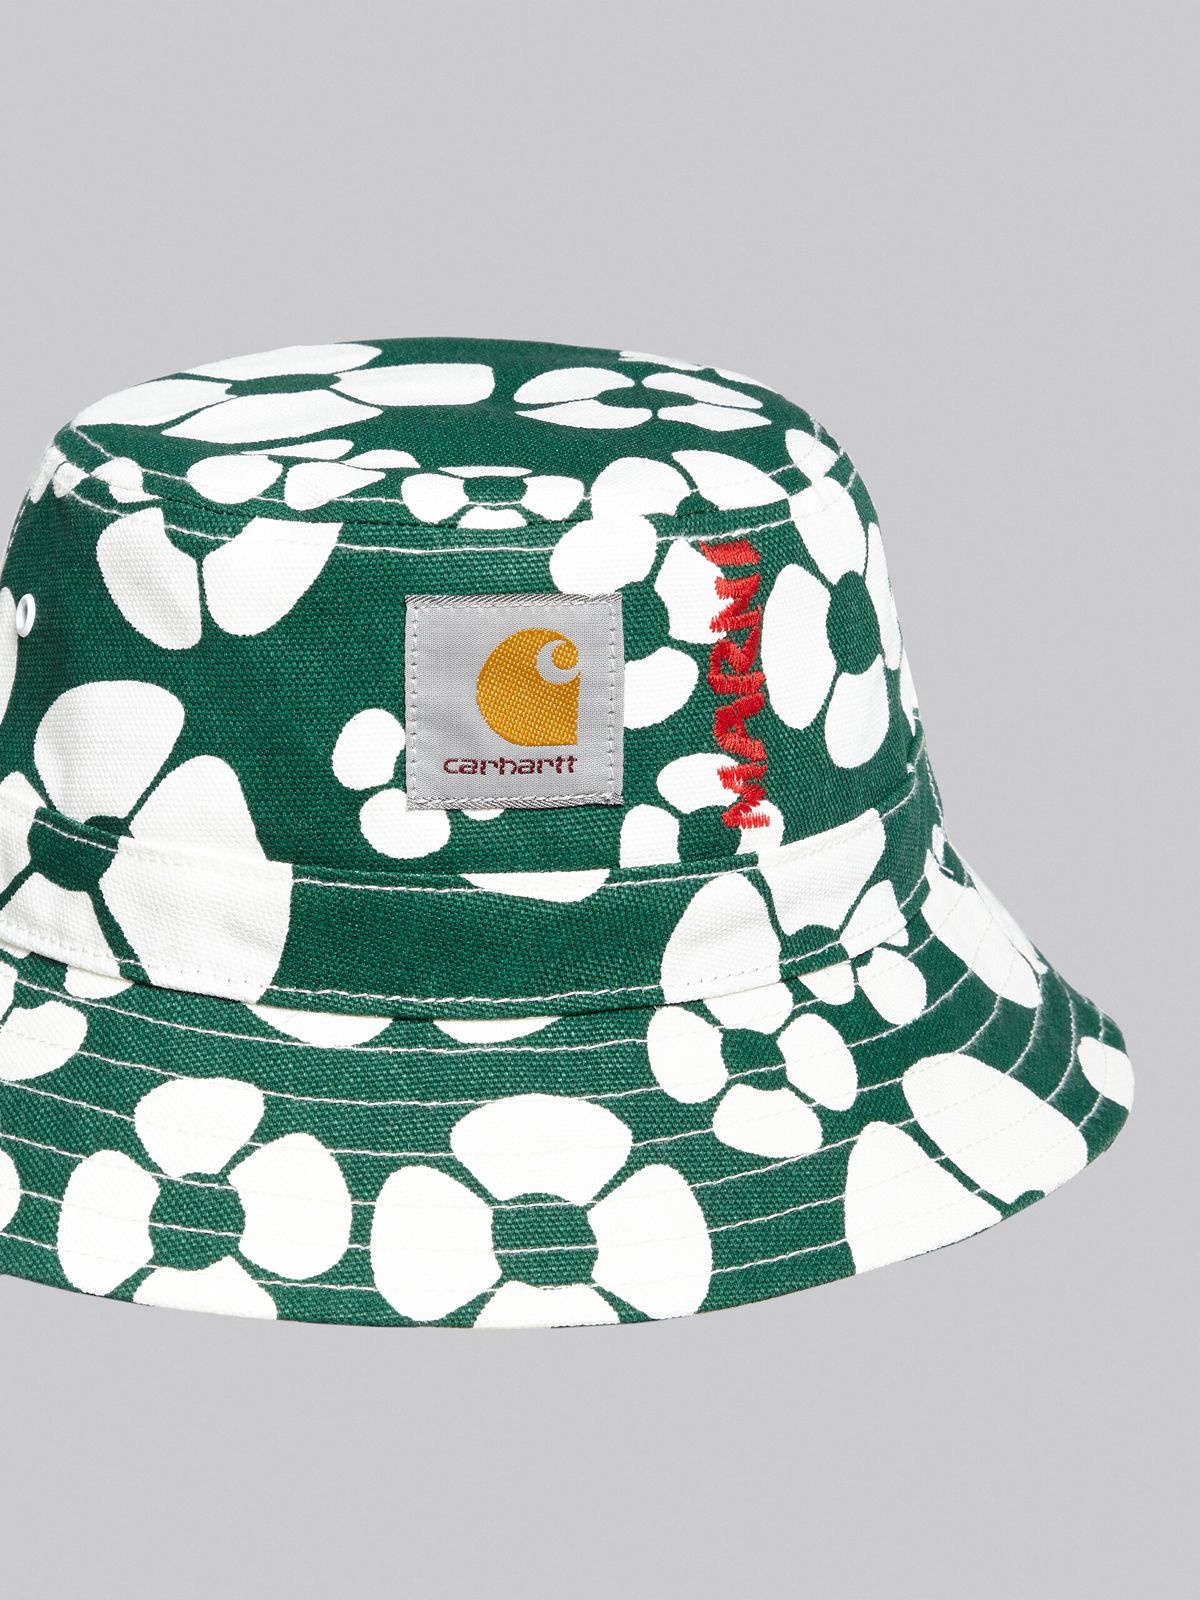 MARNI - 【ラスト1点】 MARNI X CARHARTT WIP - GREEN BUCKET HAT 